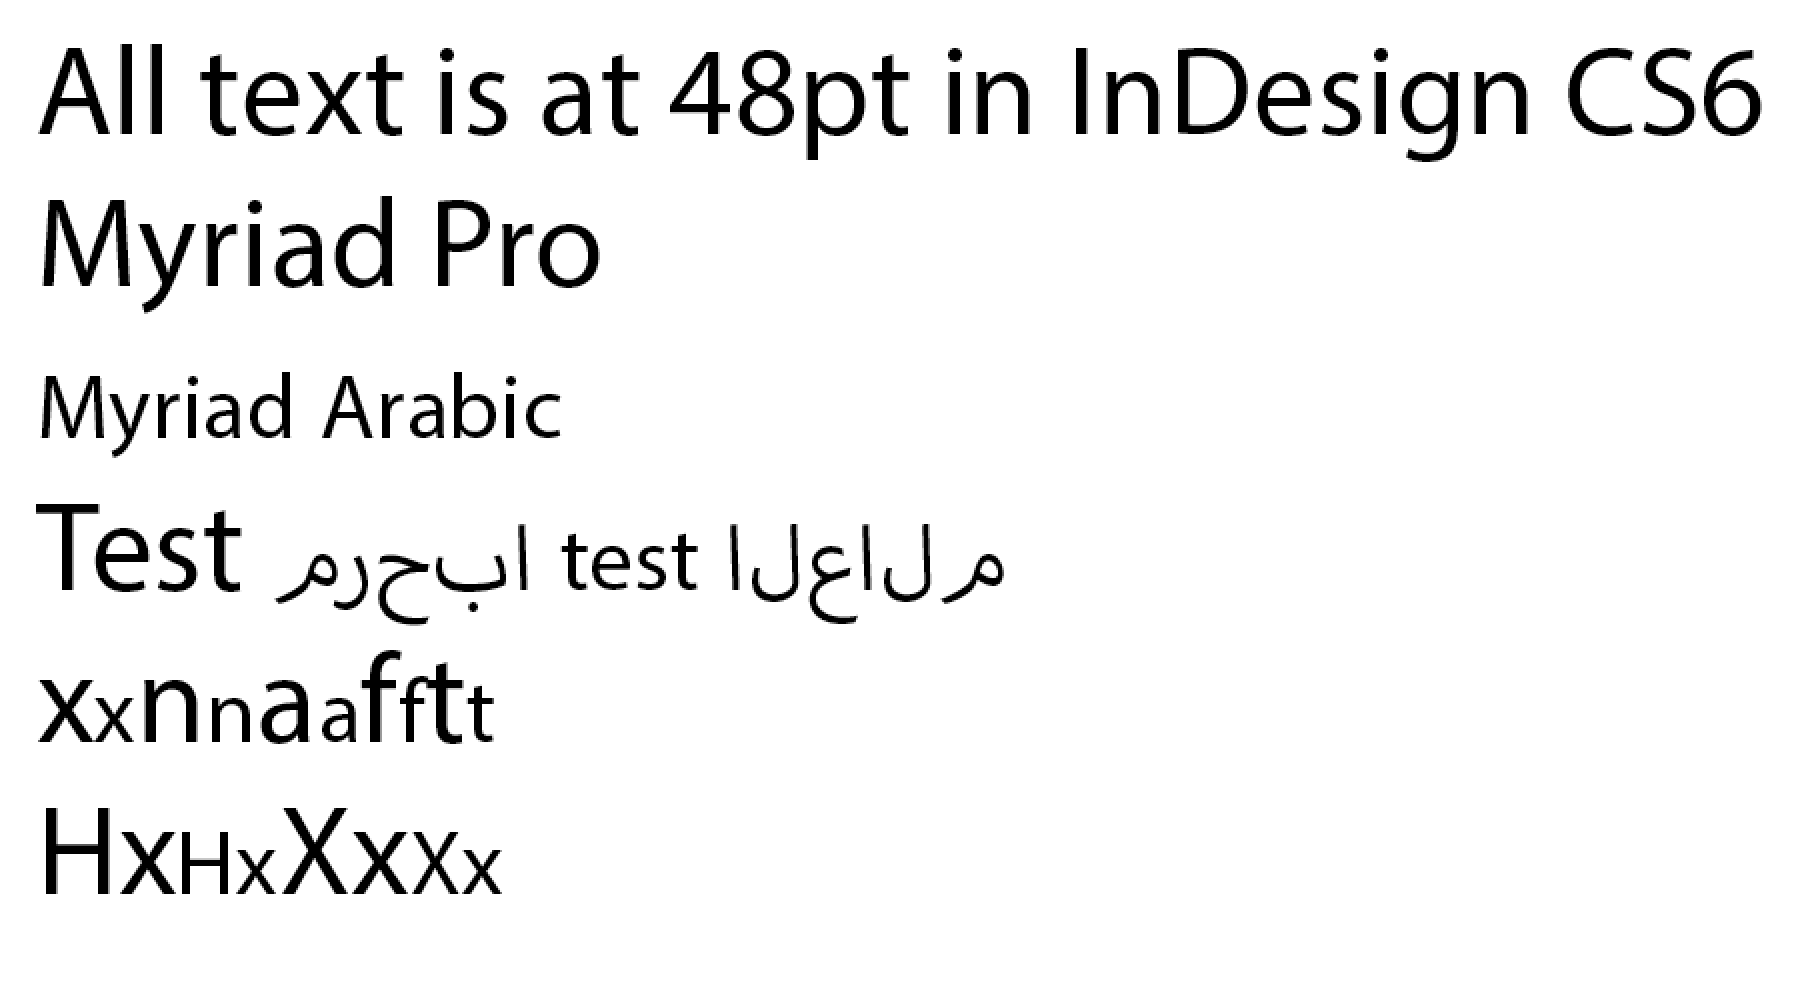 myriad_pro_vs_arabic.png